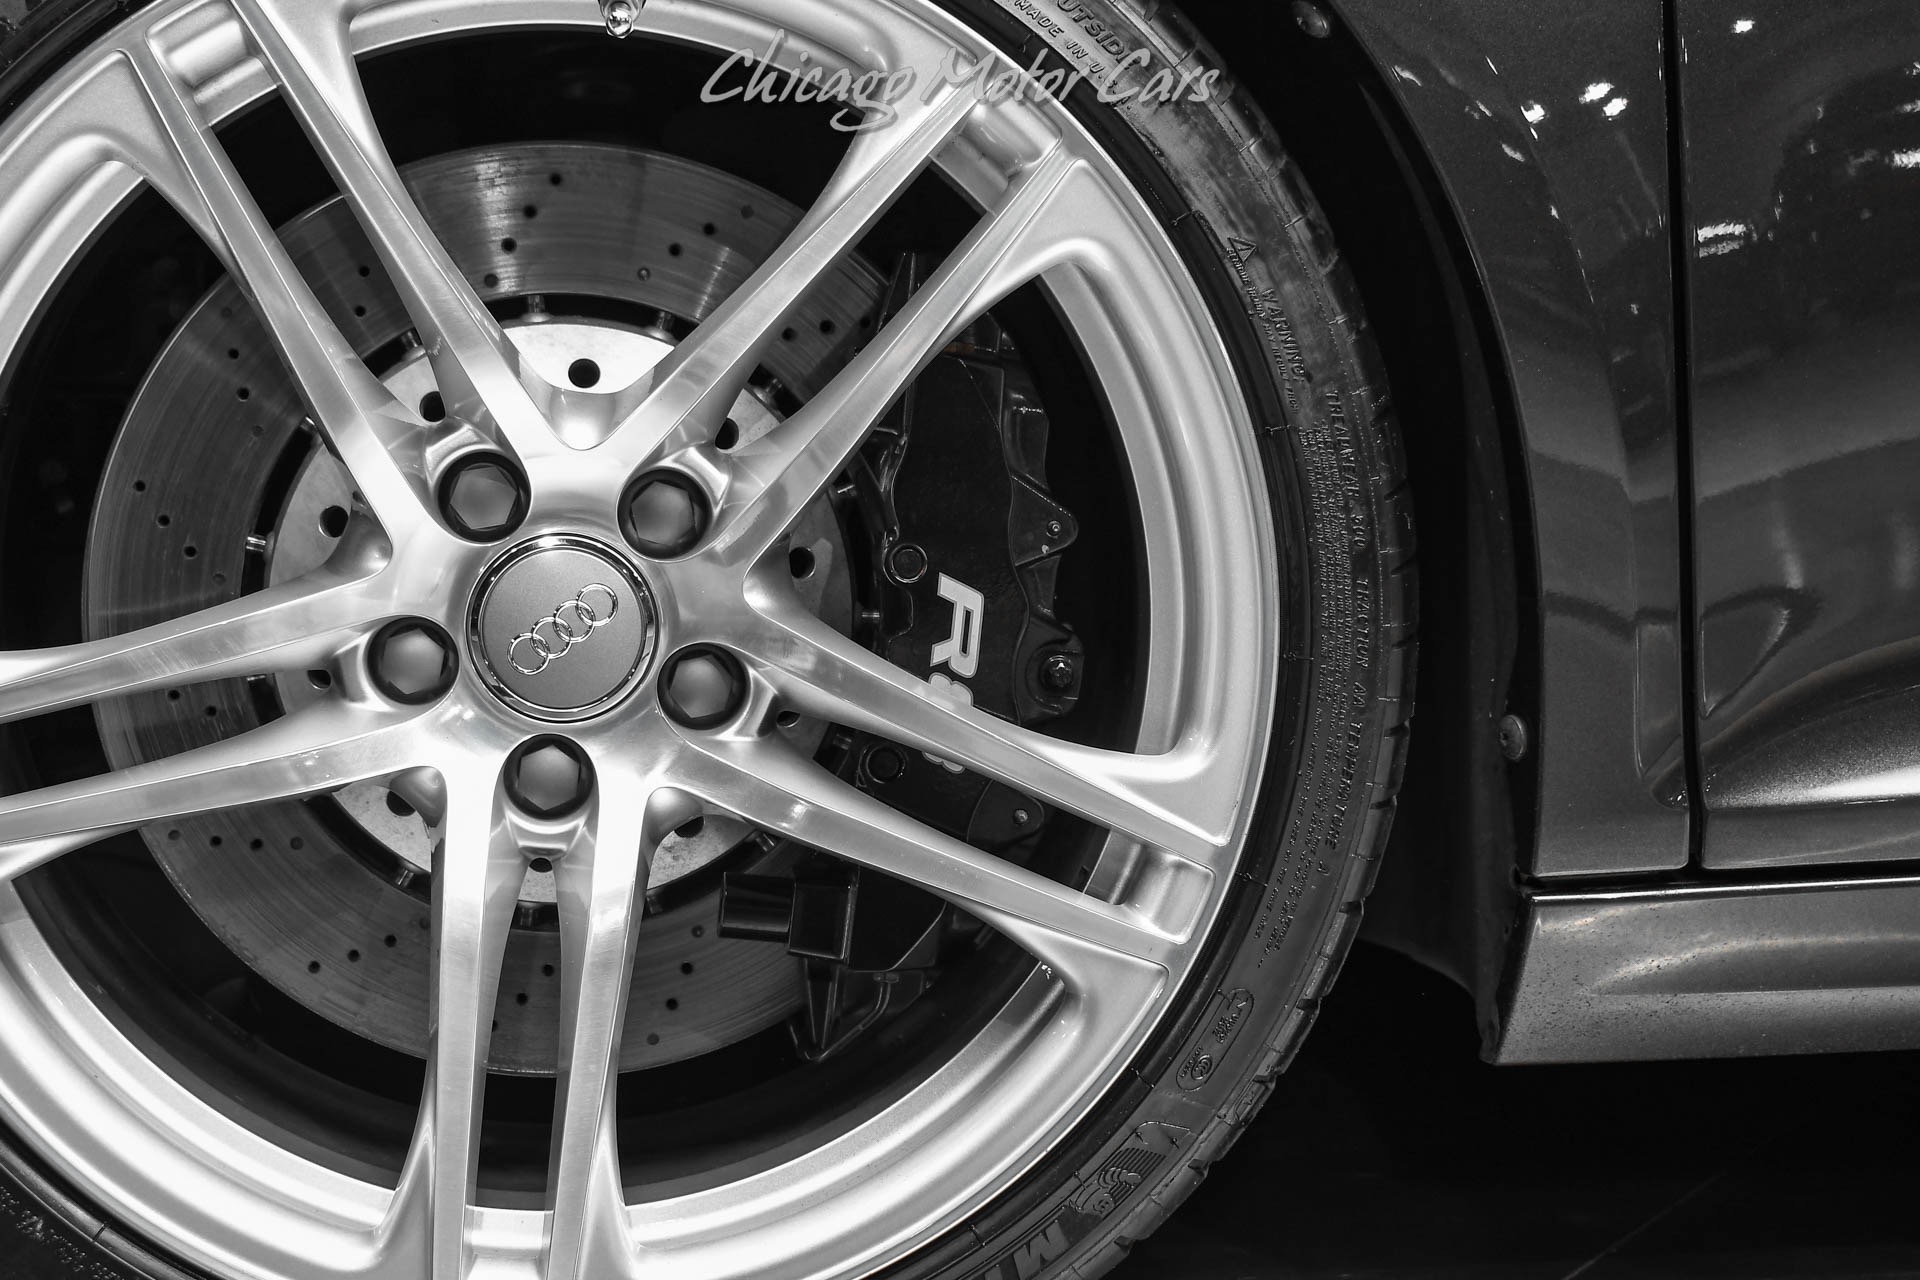 Used-2012-Audi-R8-52L-V10-Quattro-Ceramic-Coated-New-Tires-Loaded